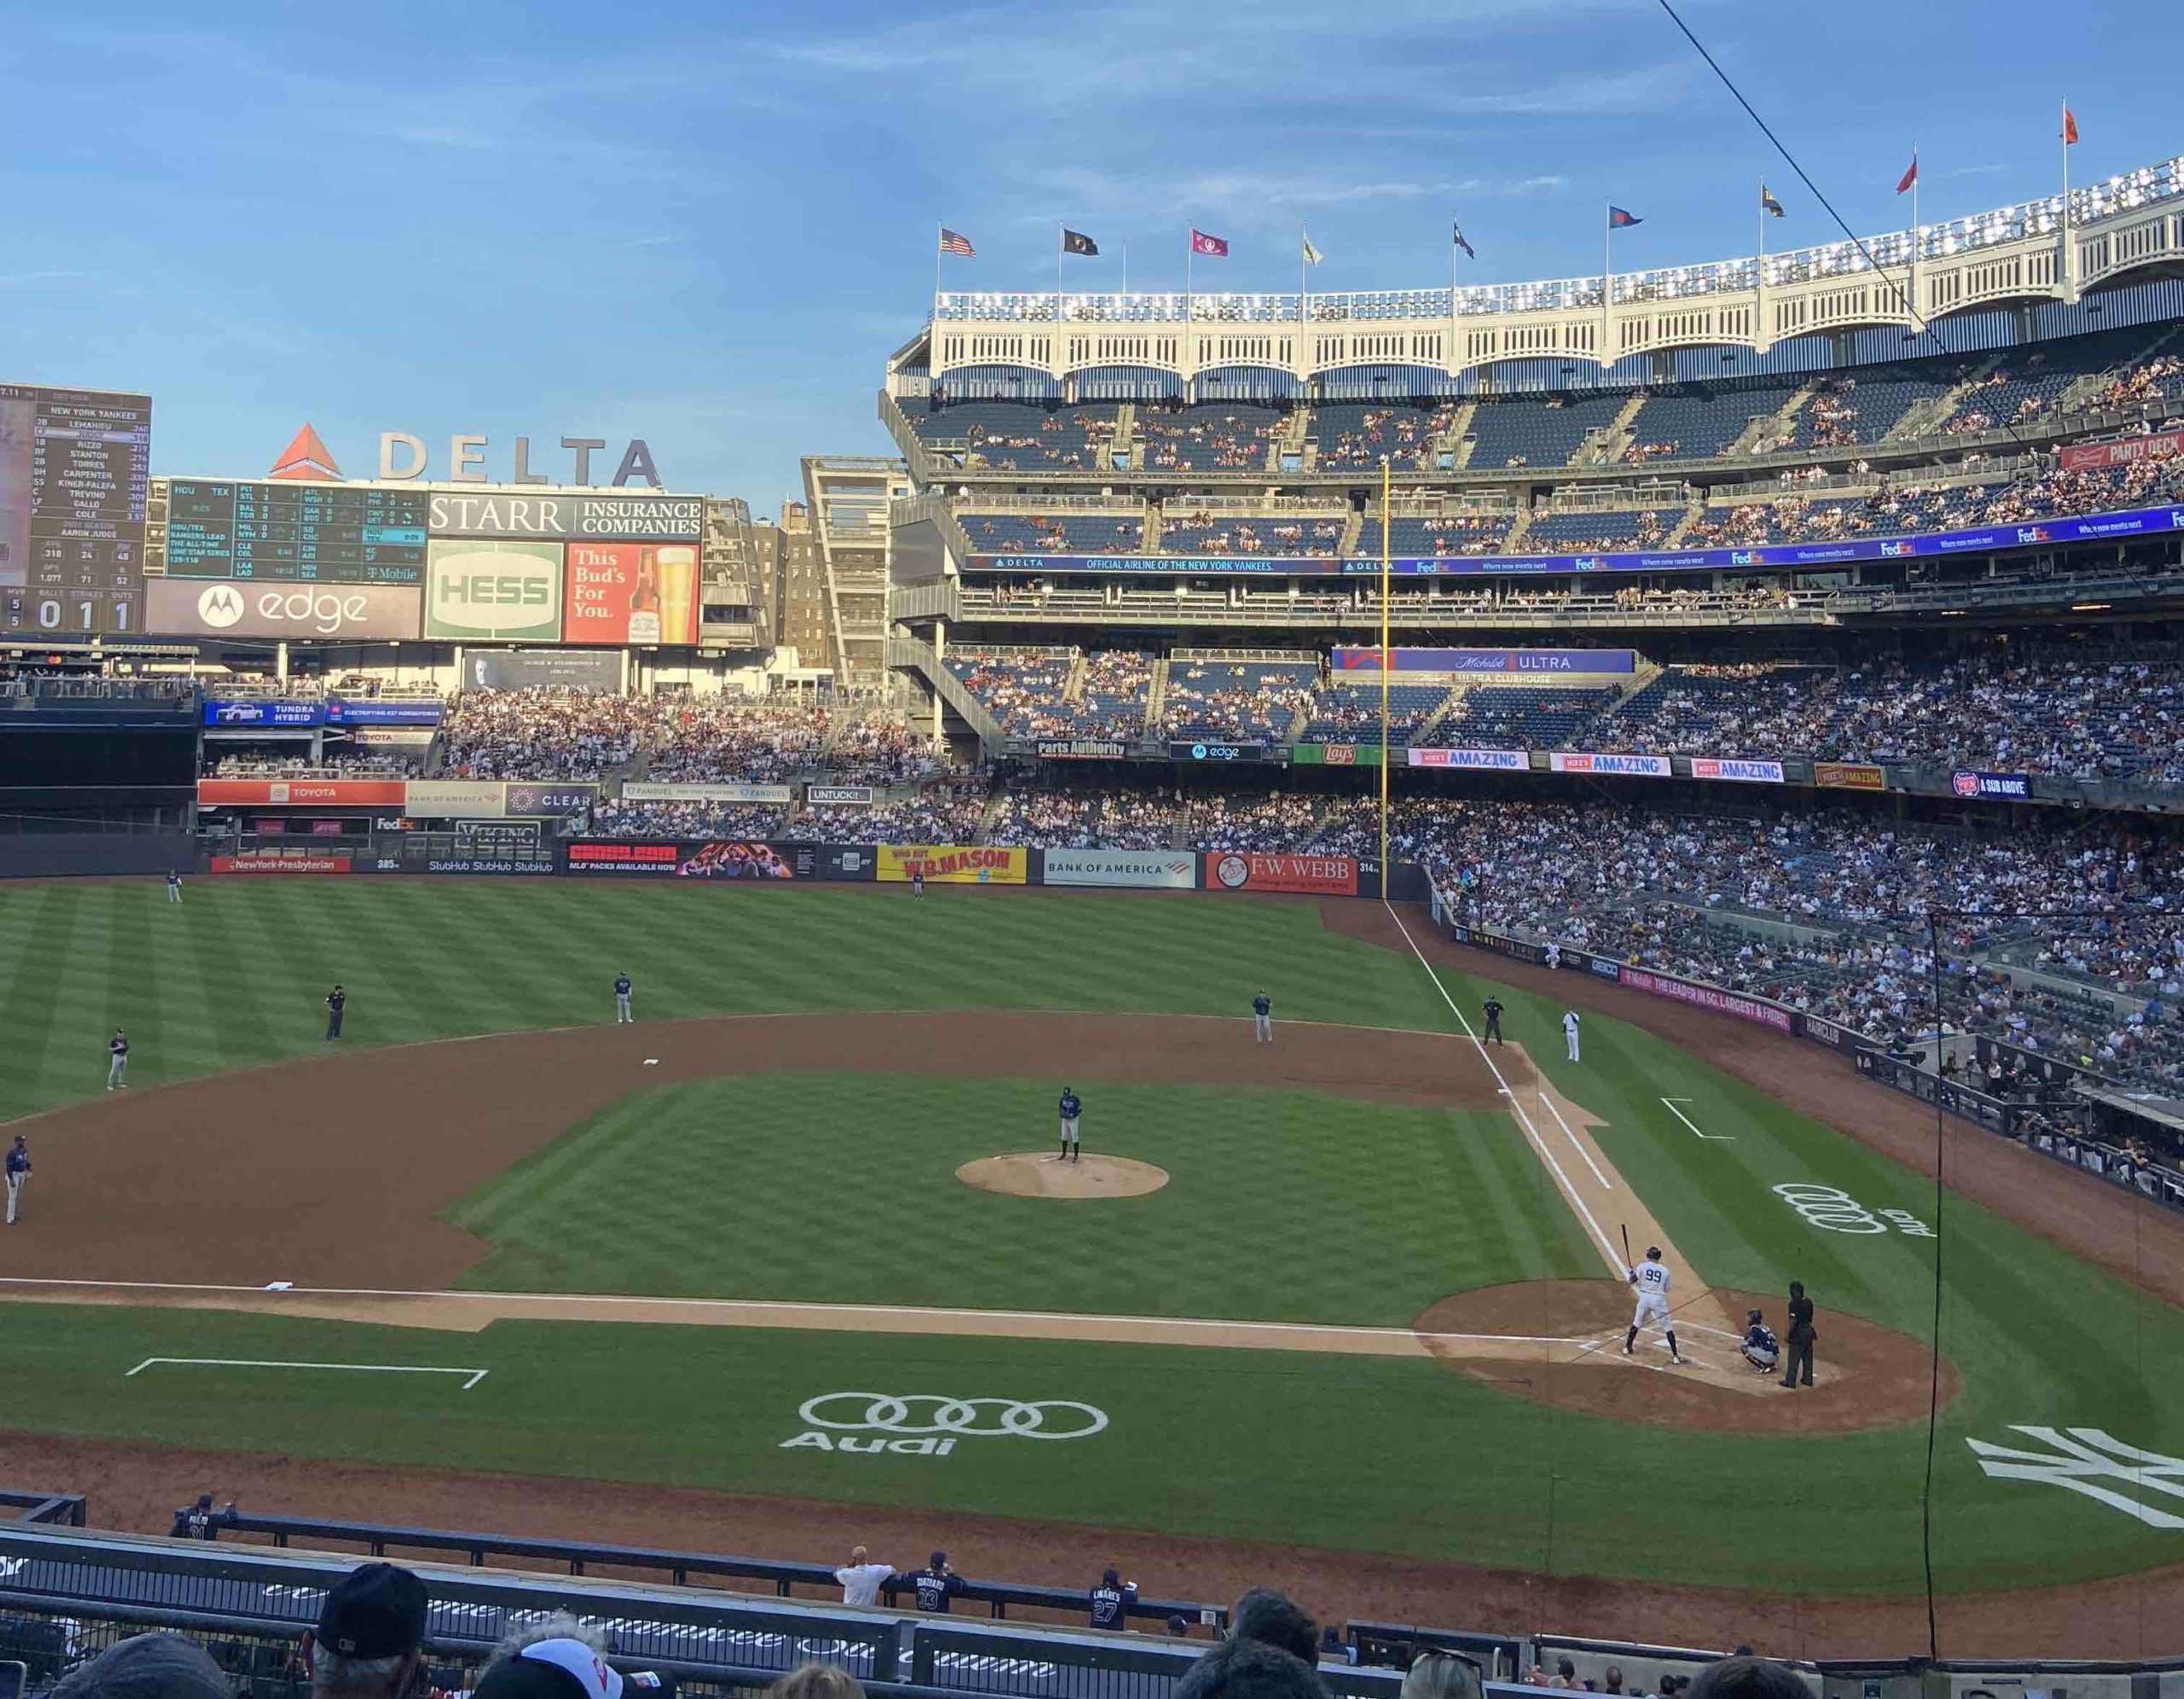 The view of the baseball field at Yankee Stadium